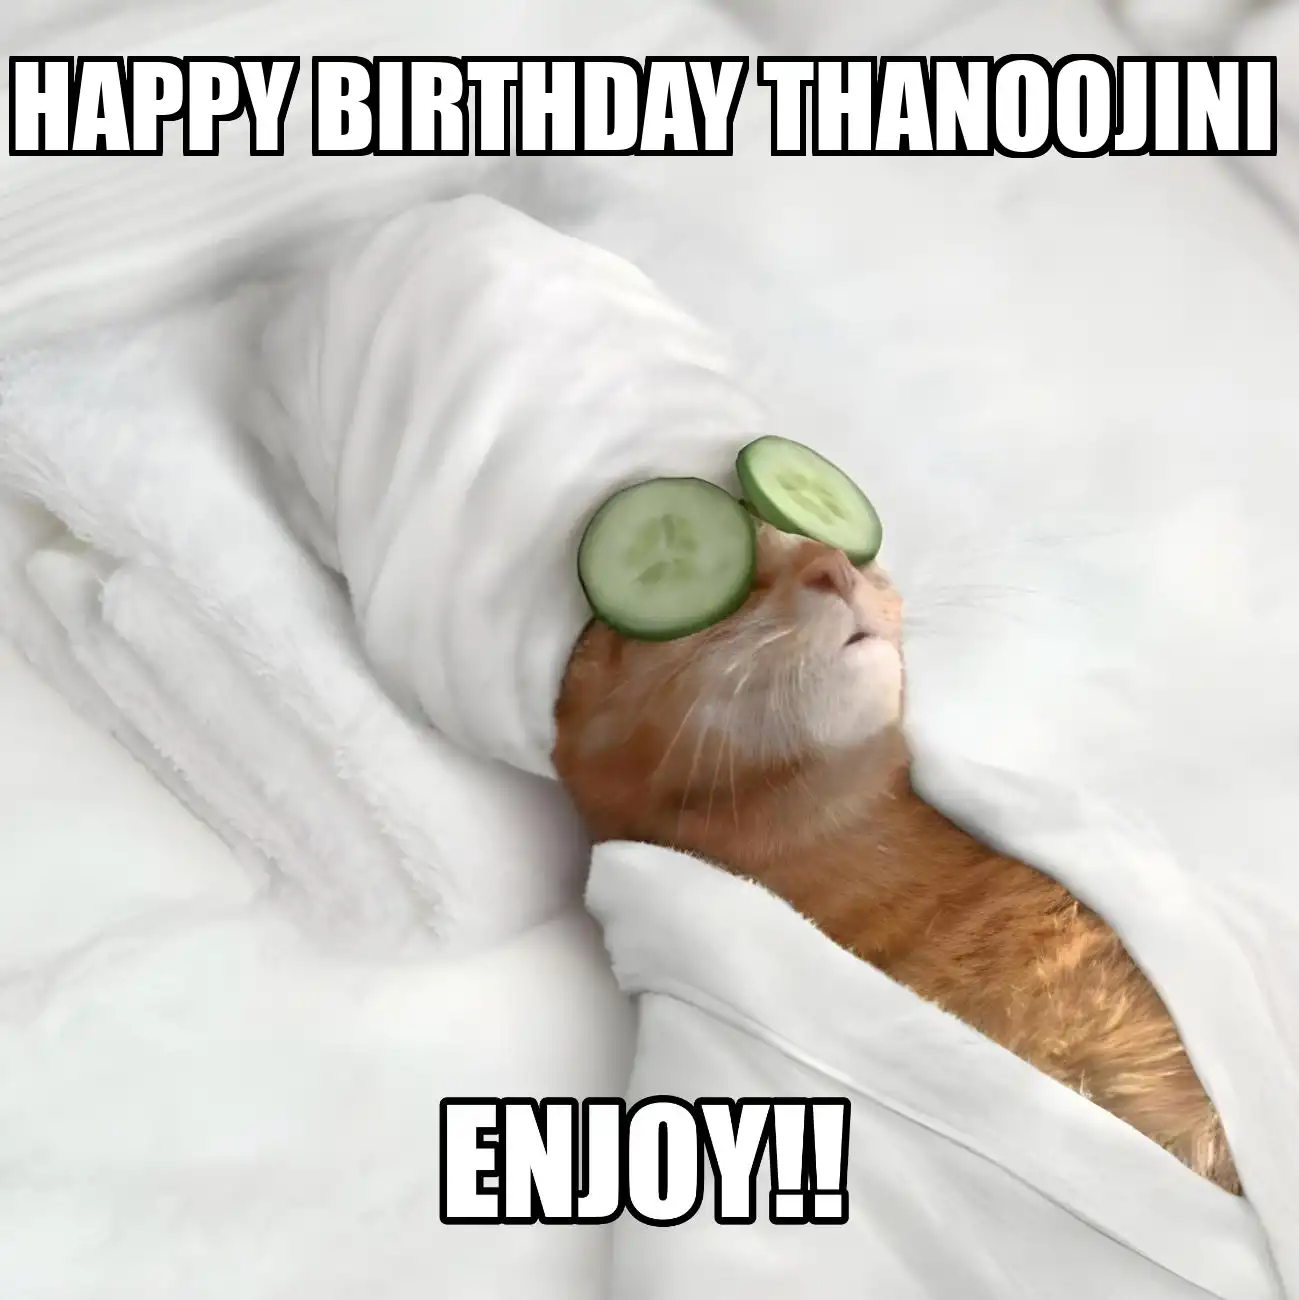 Happy Birthday Thanoojini Enjoy Cat Meme